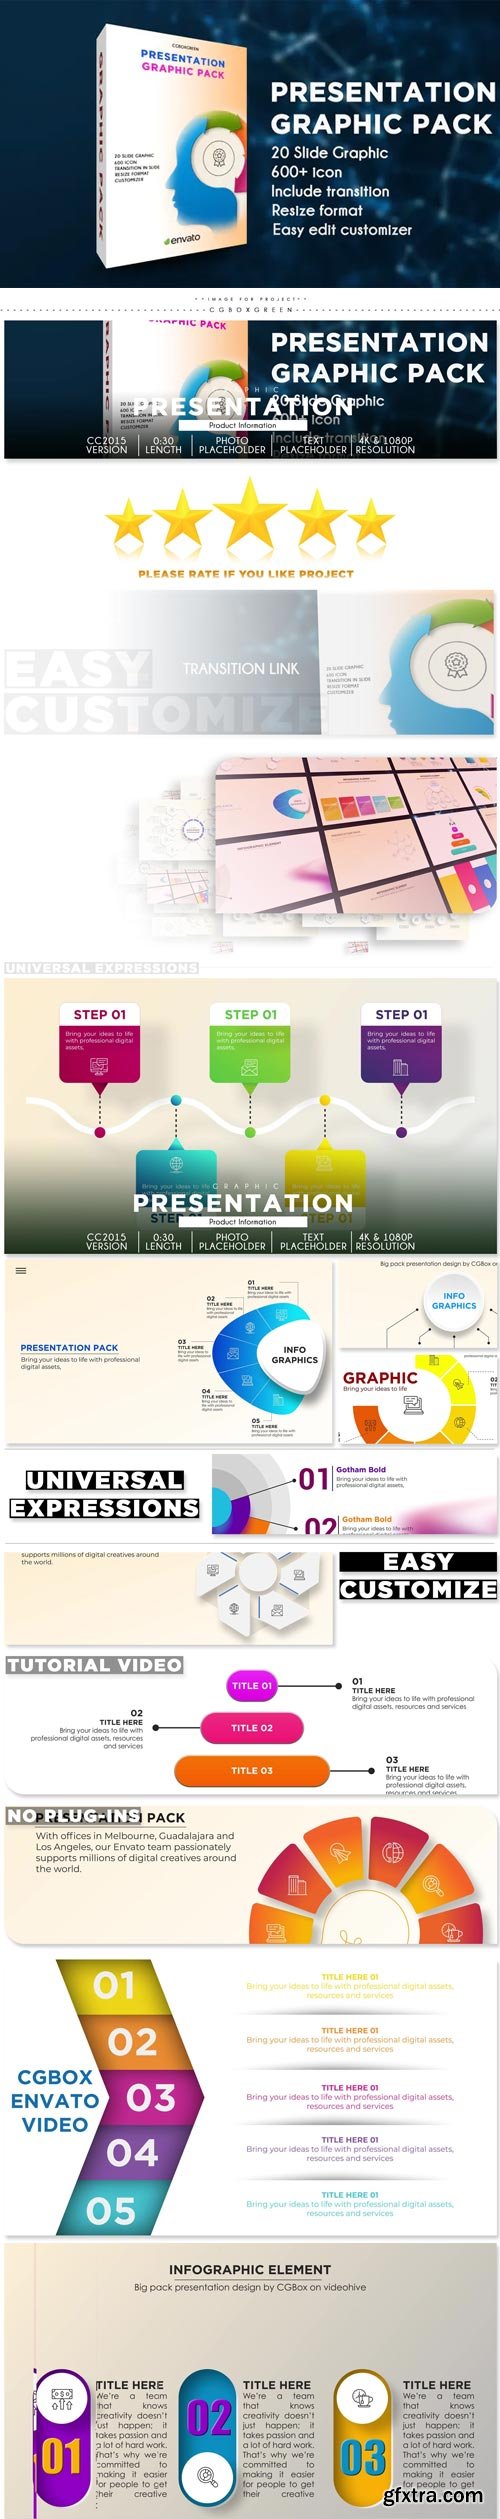 Videohive - Presentation Graphic Pack - 28765175